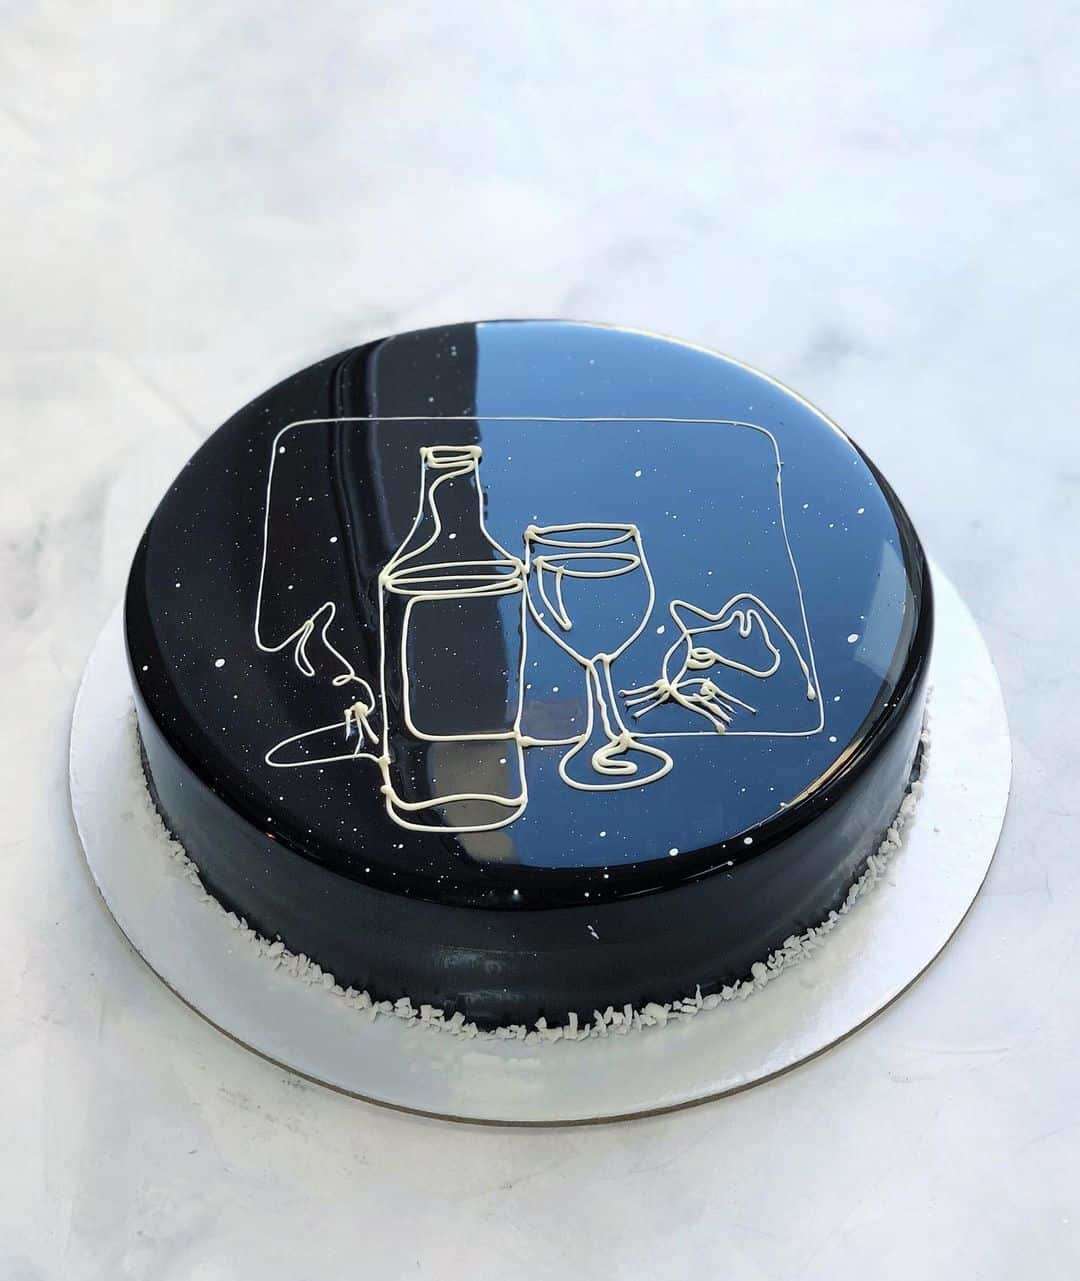 Beautifully Designed Cakes In Minimalist Style by Yuliya Ilkevich